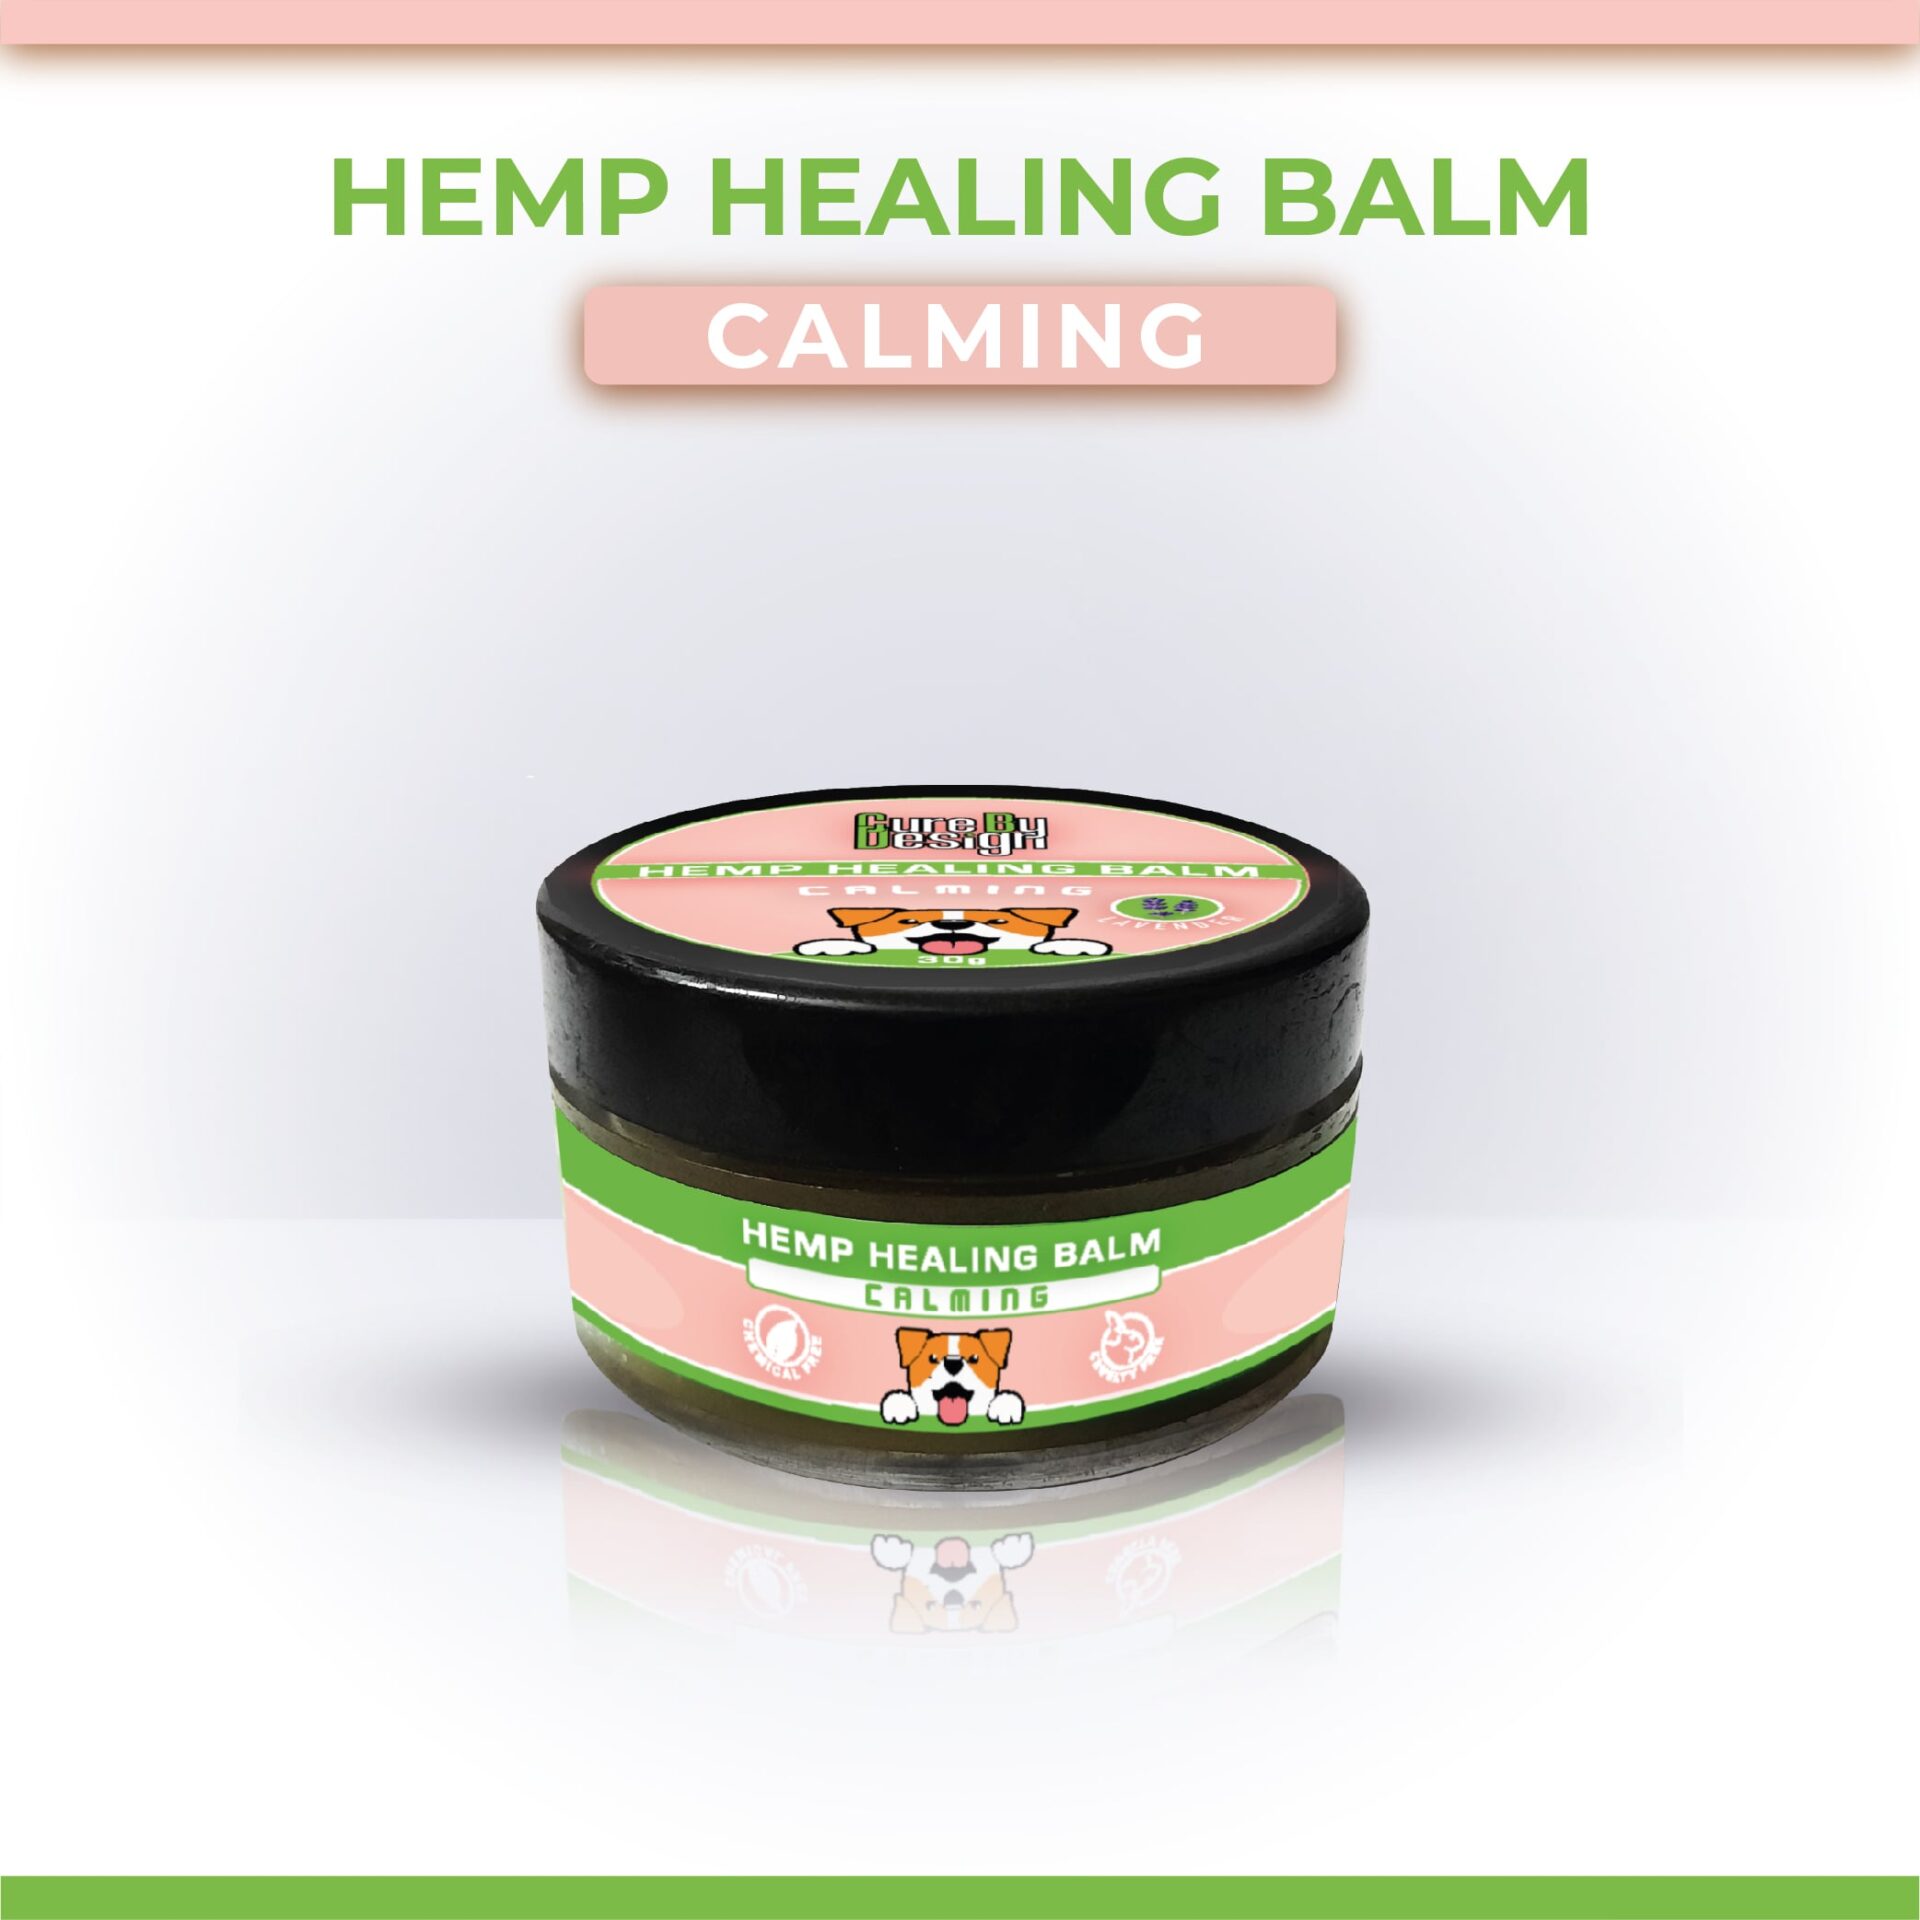 Cure By Design Hemp Healing Balm for Calming